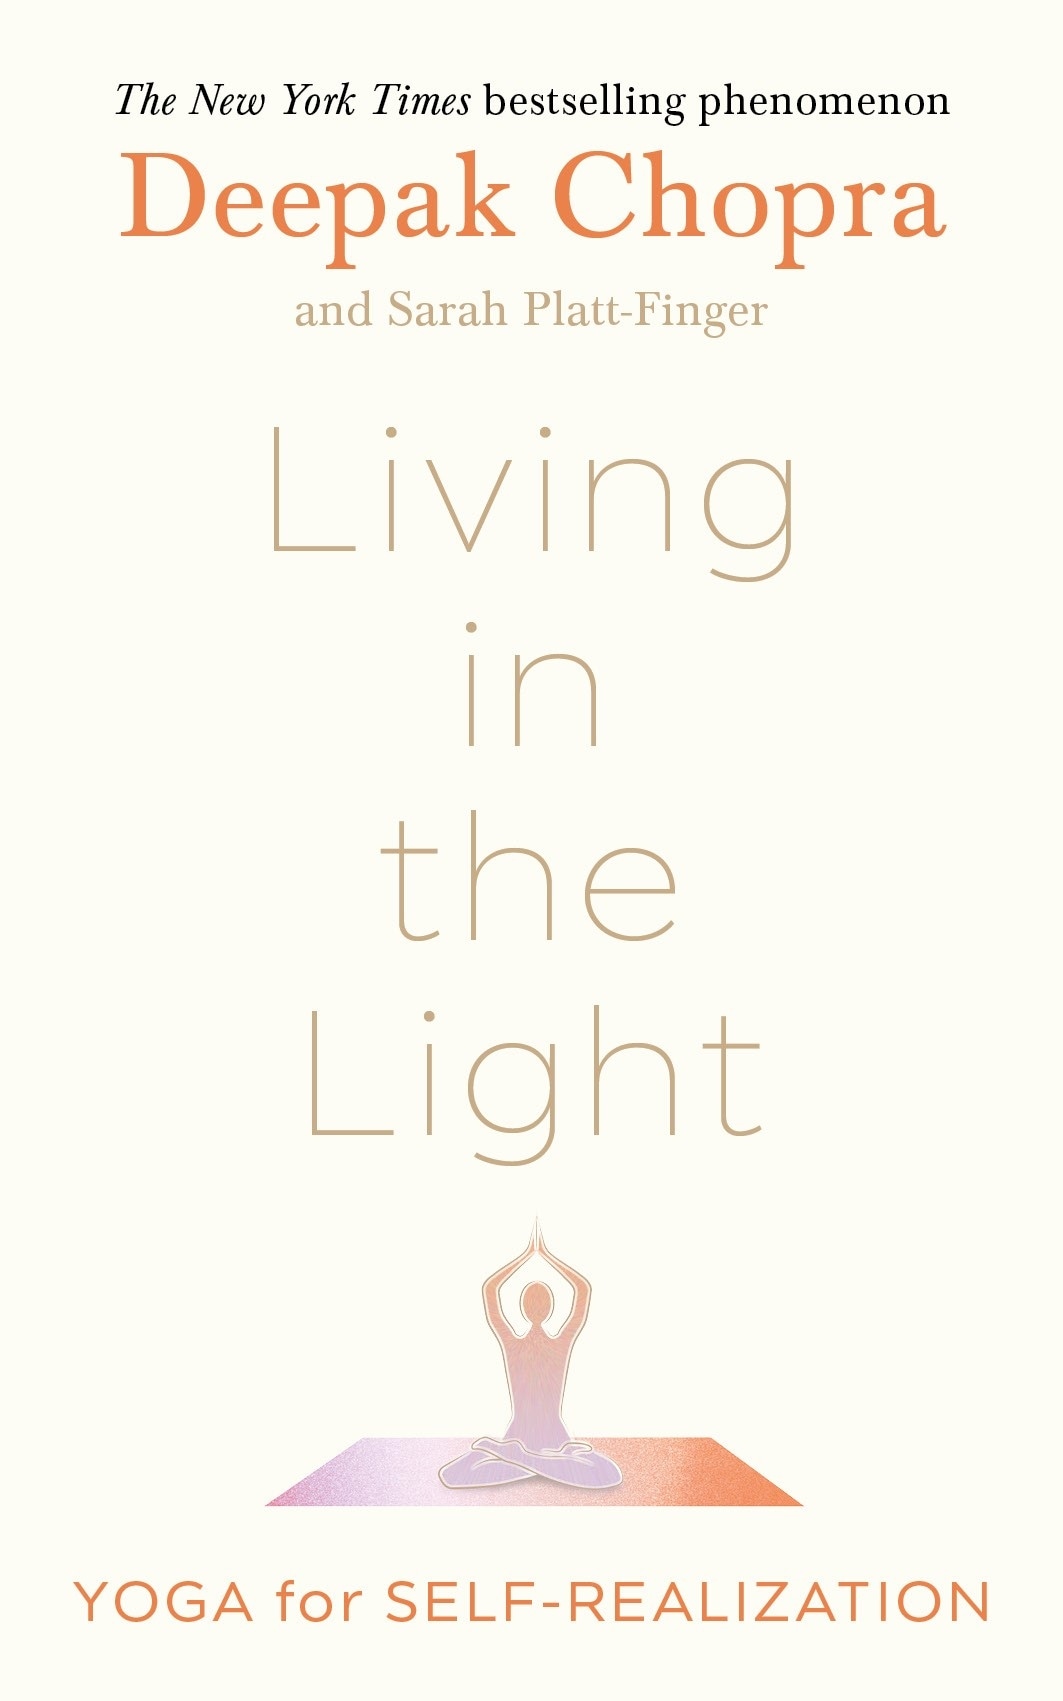 Book “Living in the Light” by Deepak Chopra — January 12, 2023